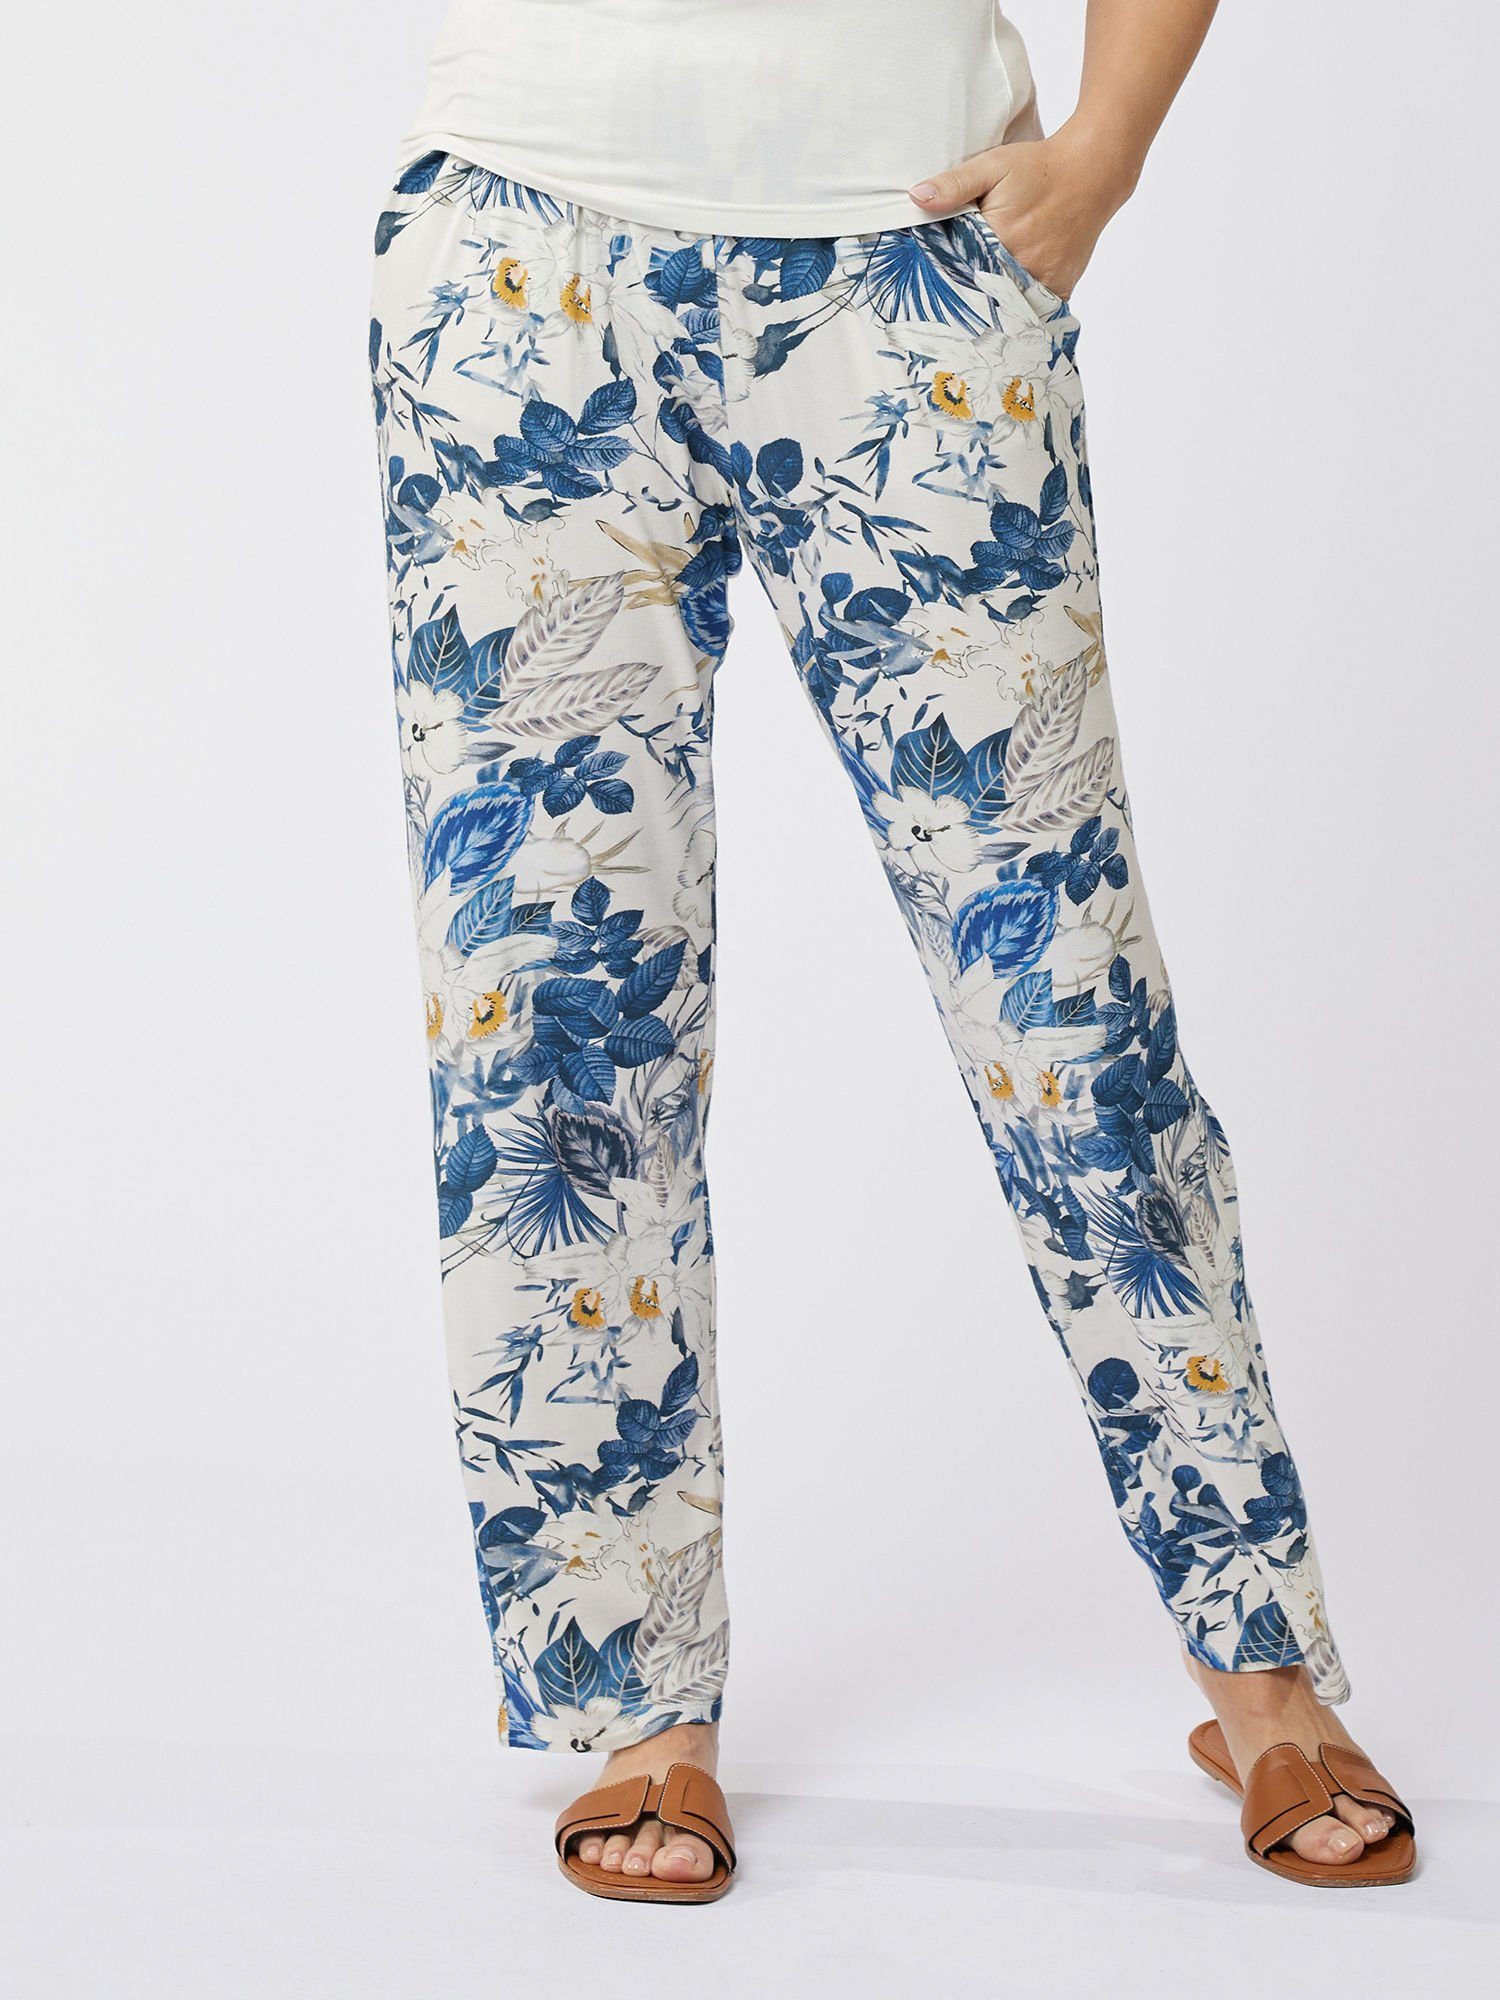 Sarah Kern Relaxhose Loungewear elastisch mit Blumenmuster